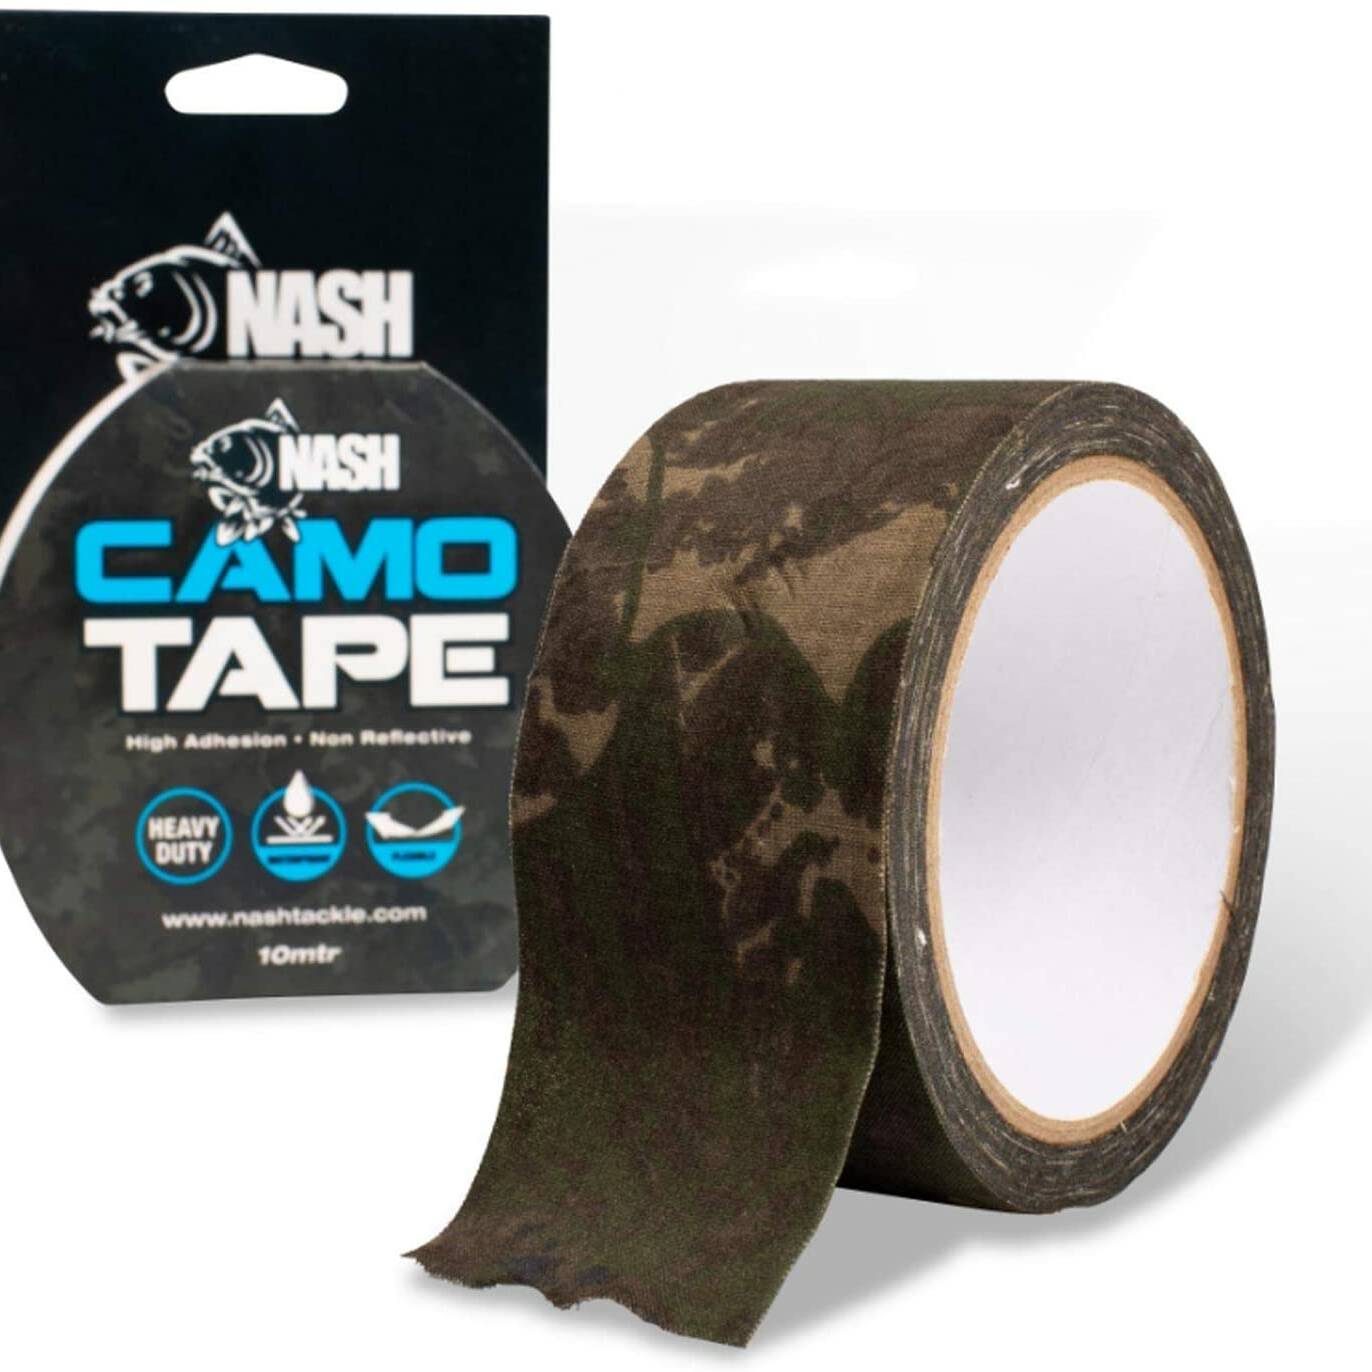 Nash Camo Tape 10m x 50mm